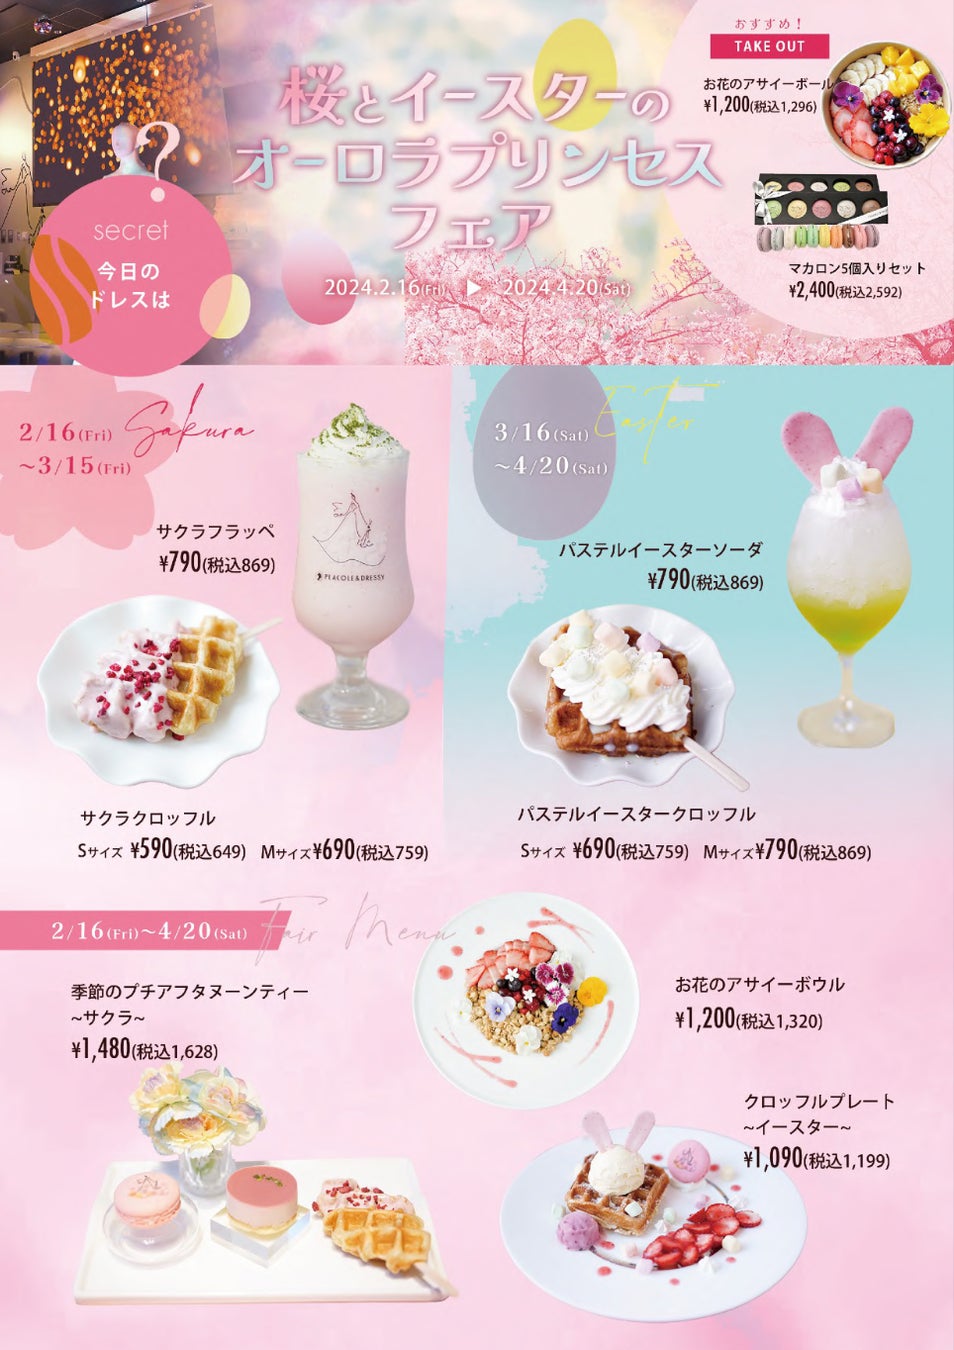 「PLACOLE ＆ DRESSY」がプロデュースするカフェ、『お花とドレスと紅茶のお店 DRESSY CAFE KAMAKURA』が2月1...